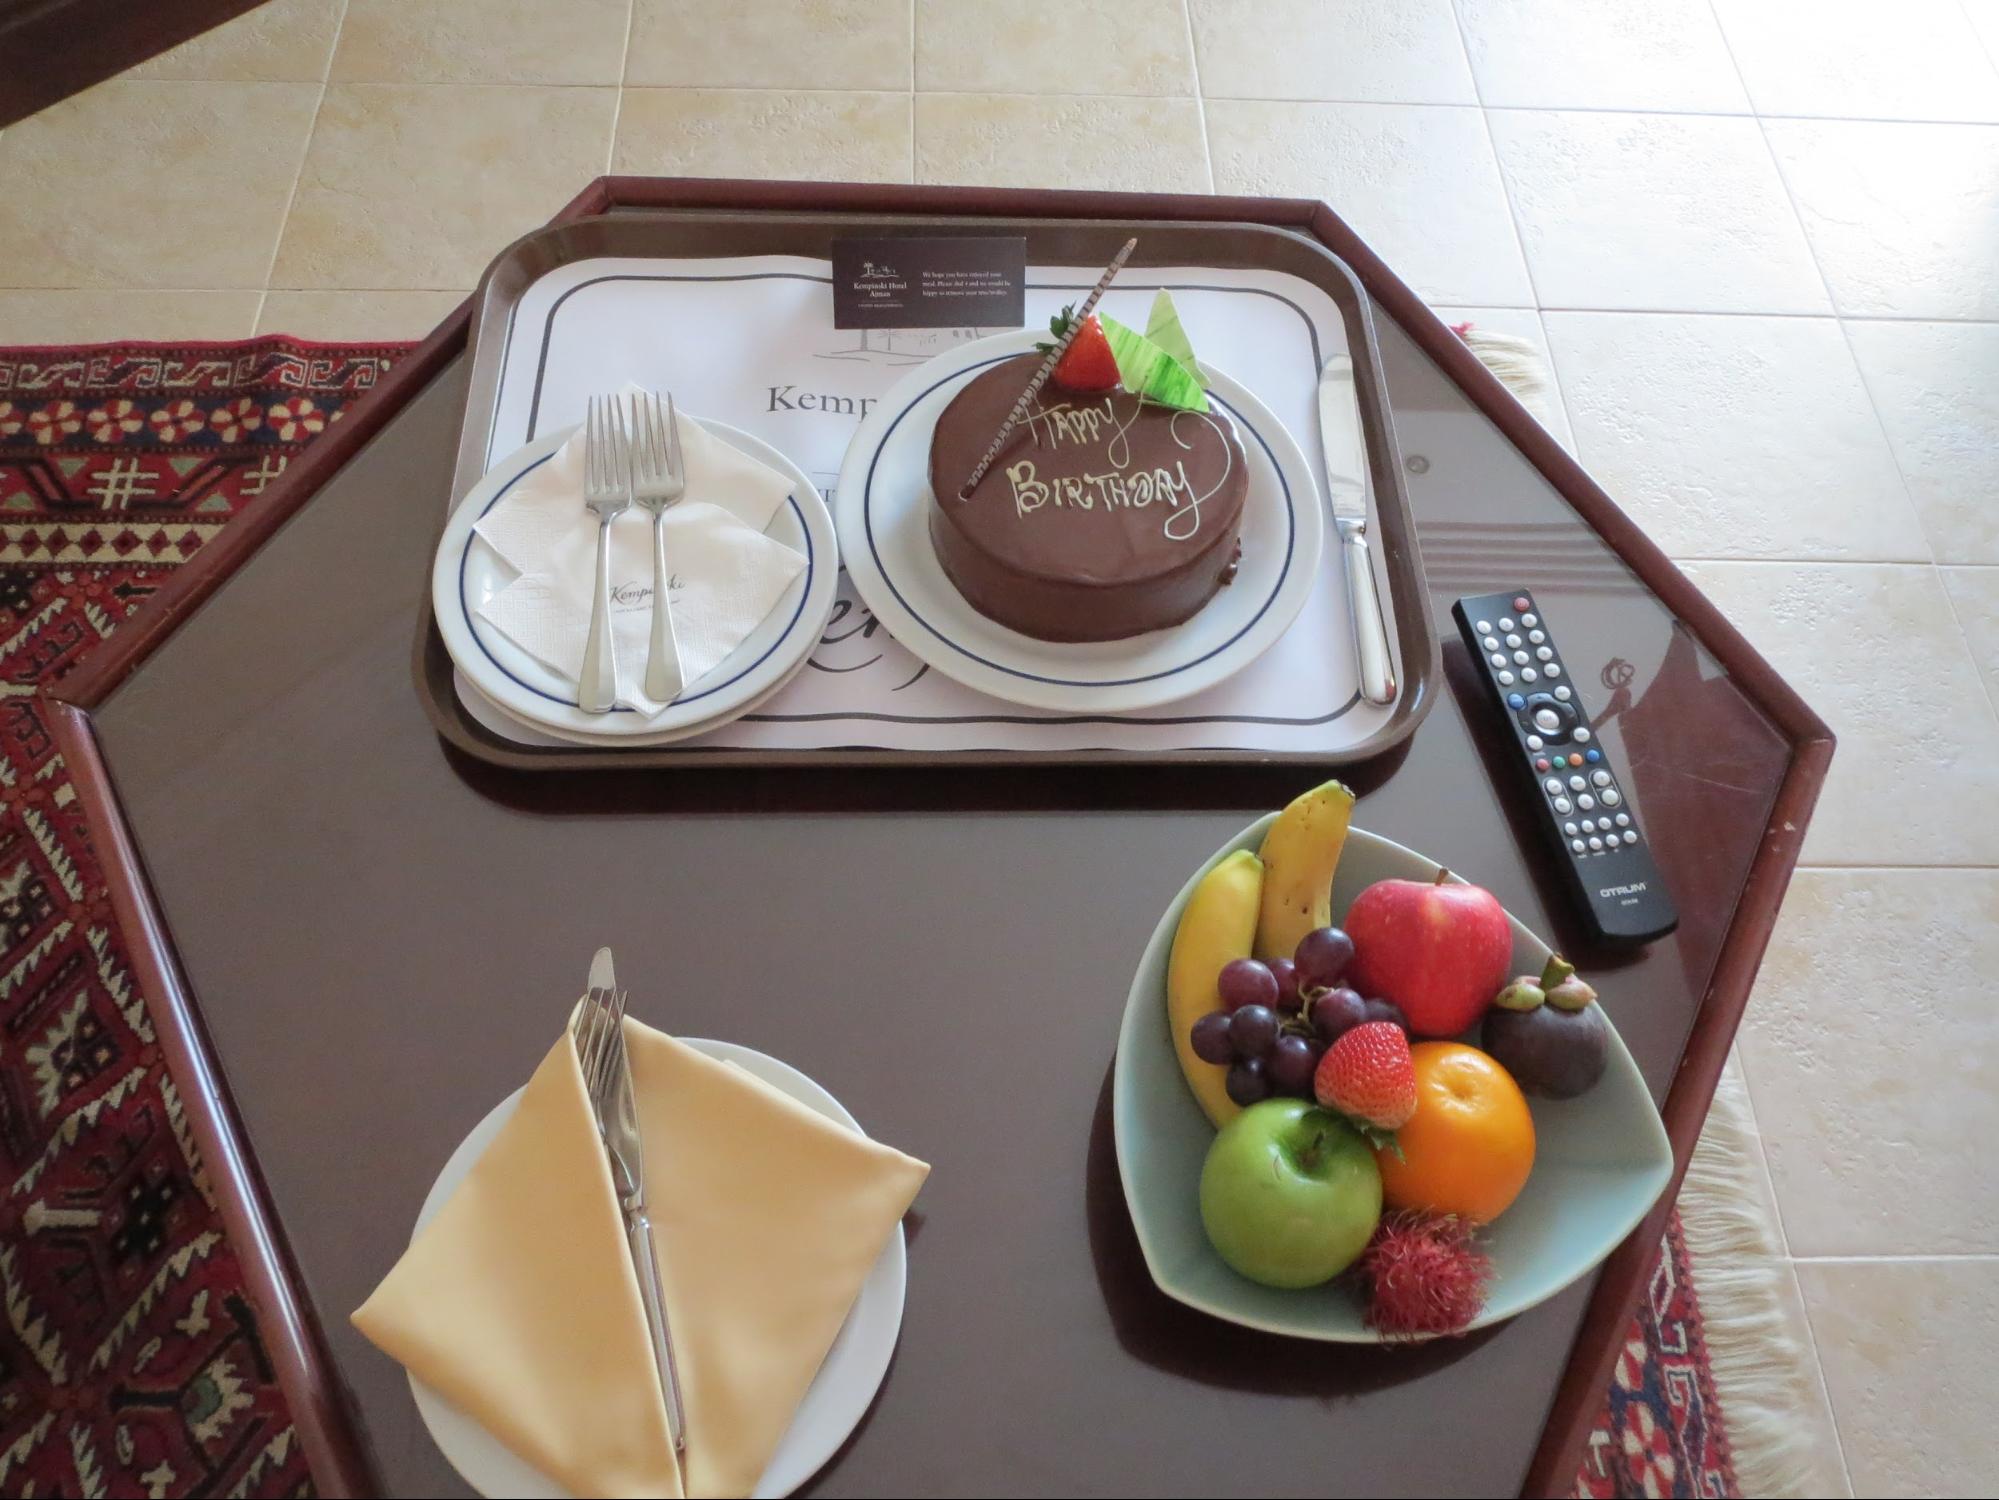 Kempinski Hotel, Ajman Review - Special Birthday Surprise Chocolate Cake